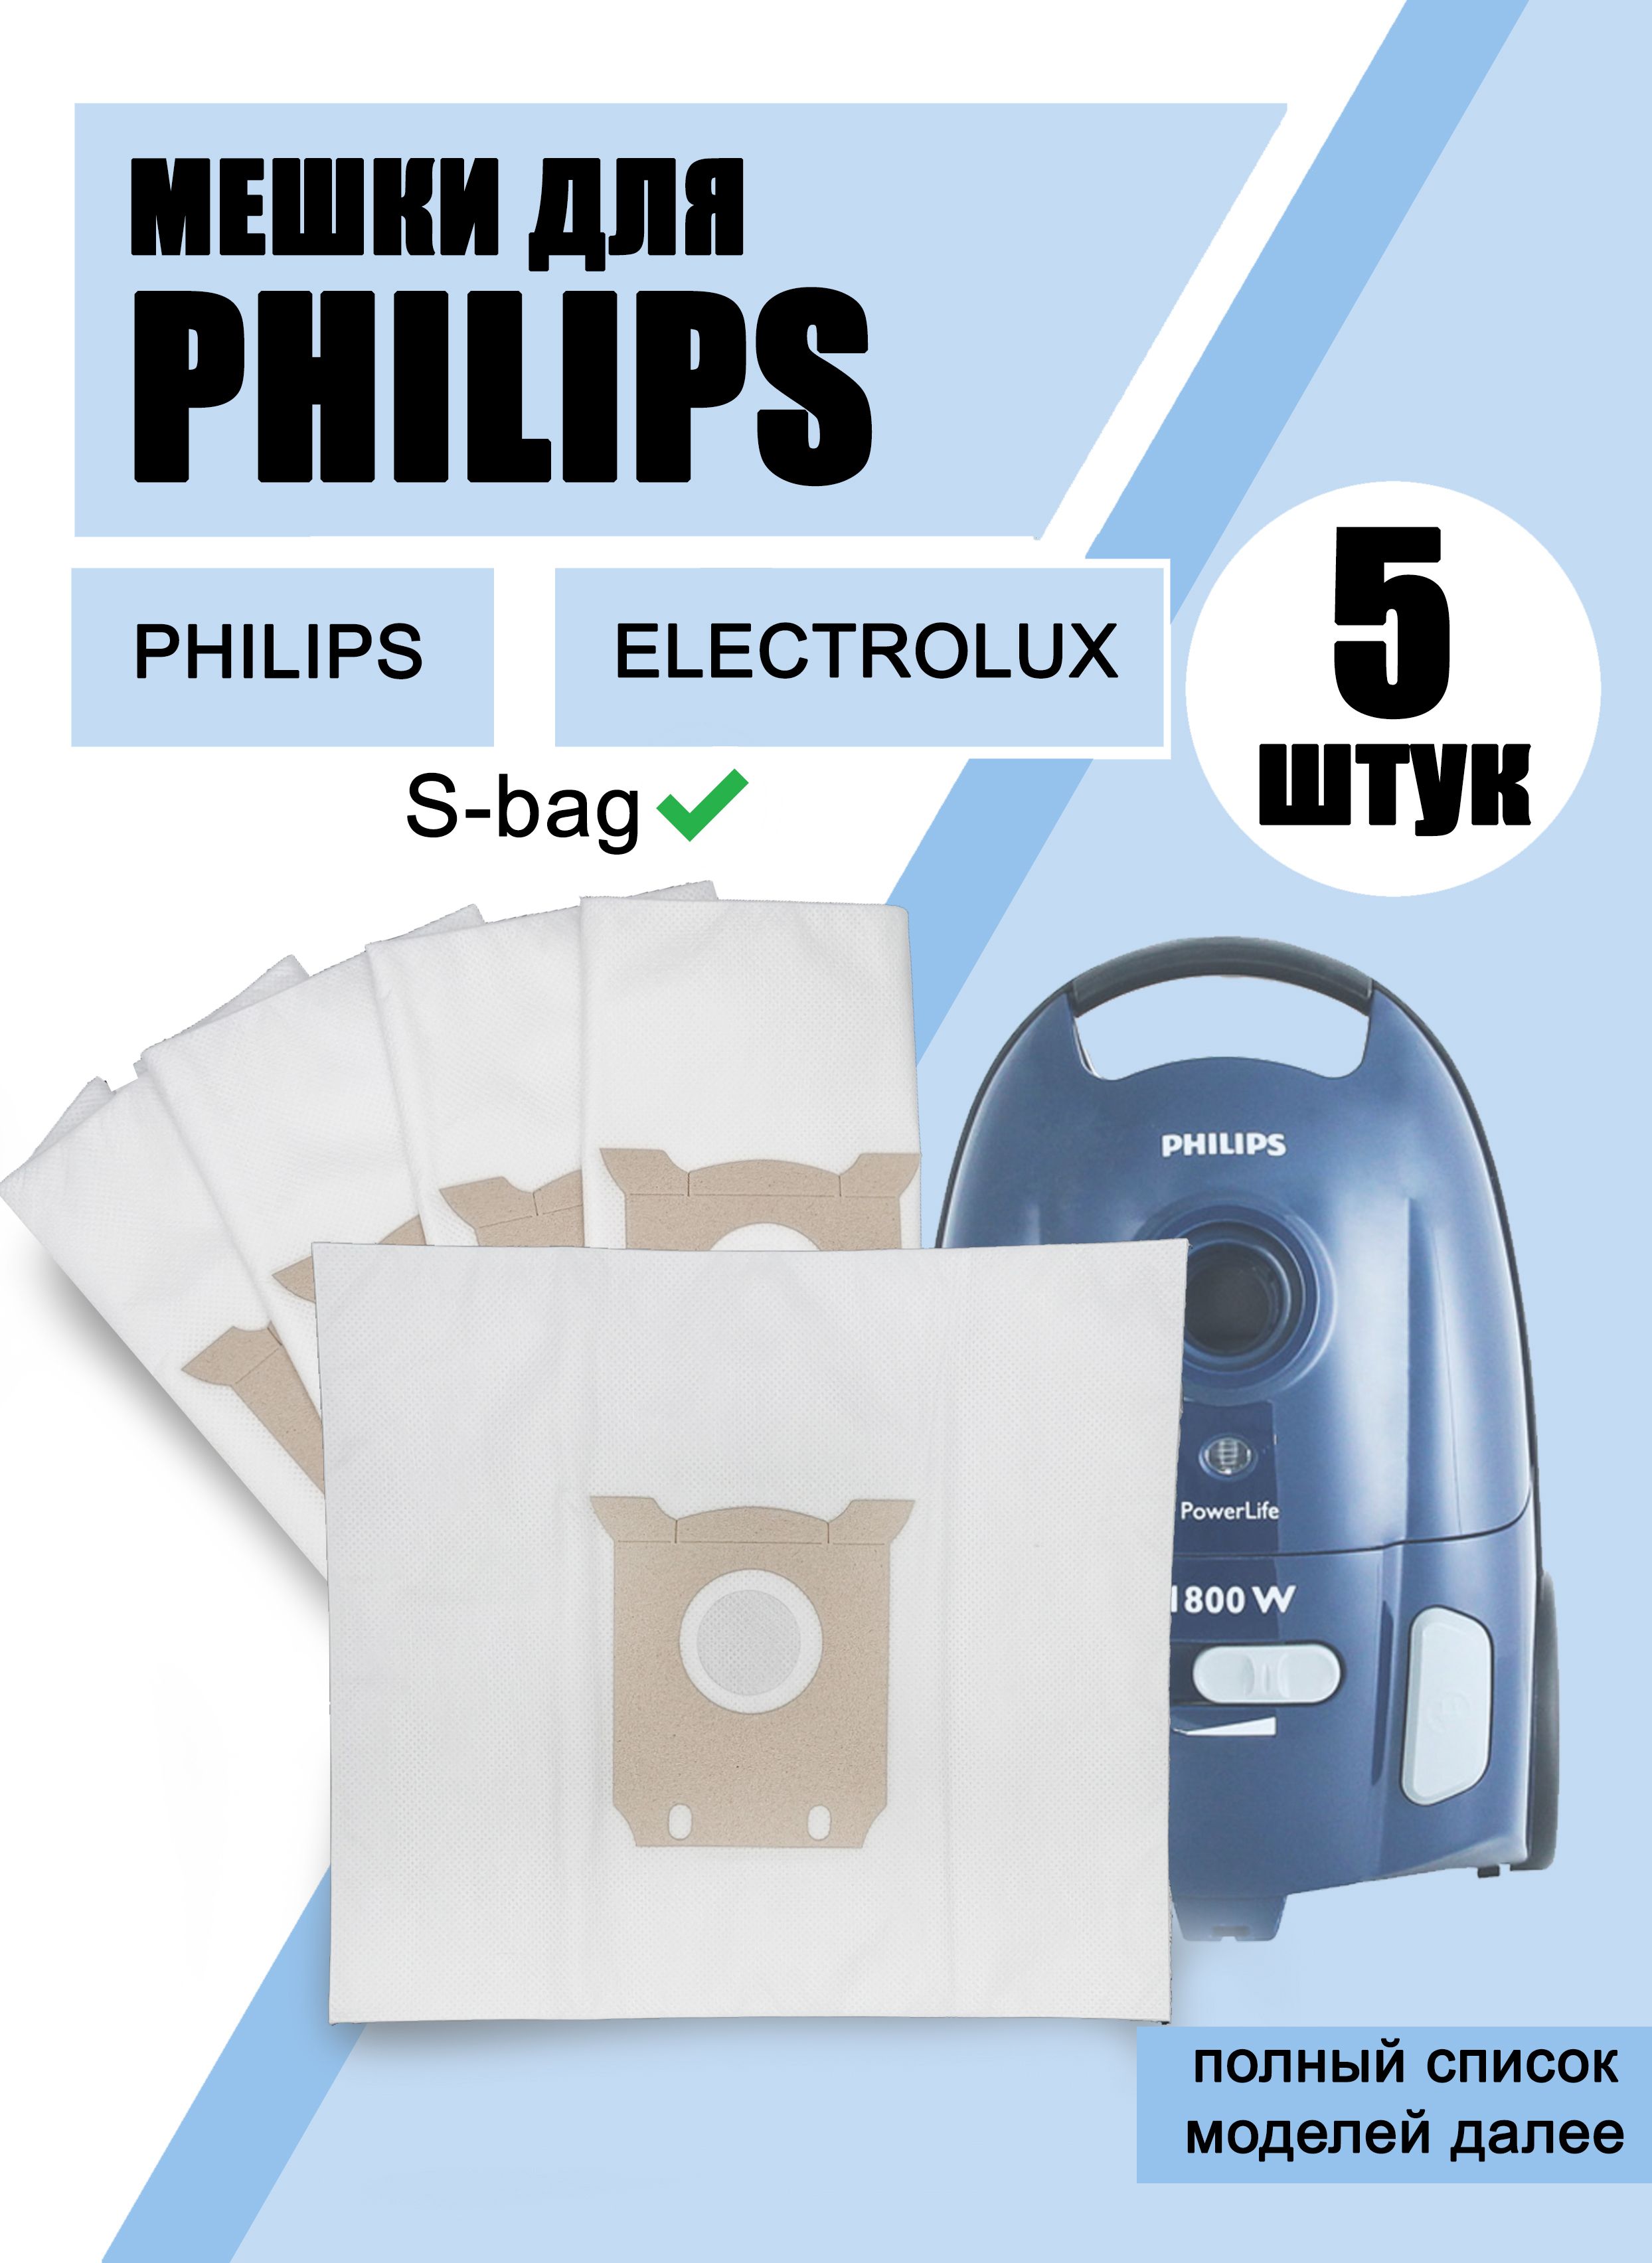 Philips FC 9170 мешок. Мешок пылесборник пылесоса Филипс zx0043s (одноразовый). XT-503 мешок-пылесборник. Пылесос Филипс с мешком. Пылесборник филипс